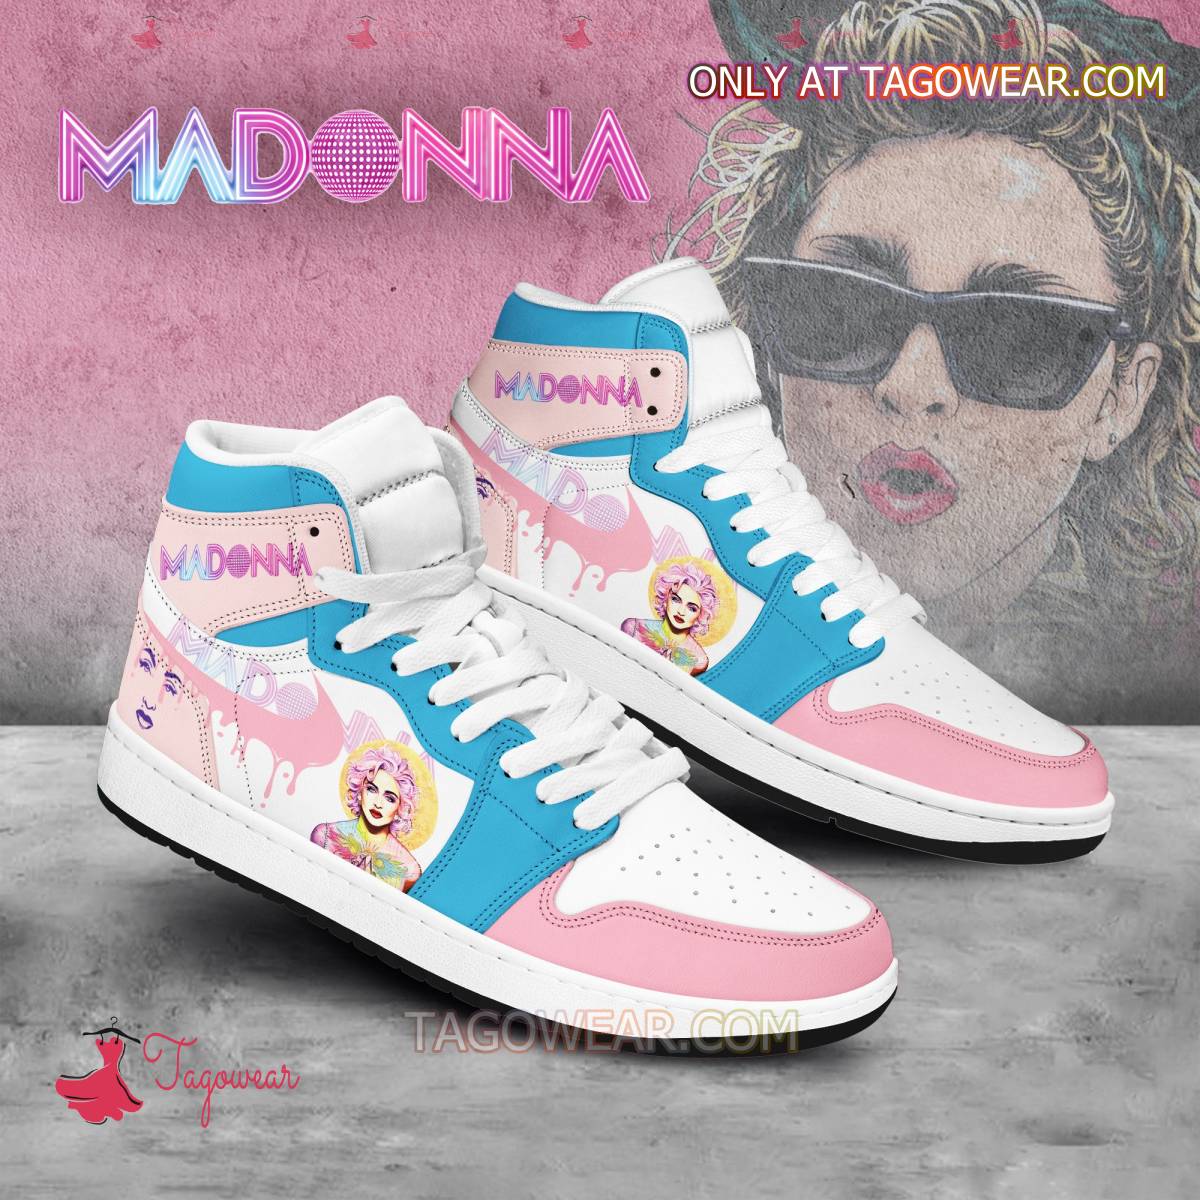 Madonna Singer Pink Air Jordan High Top Shoes a